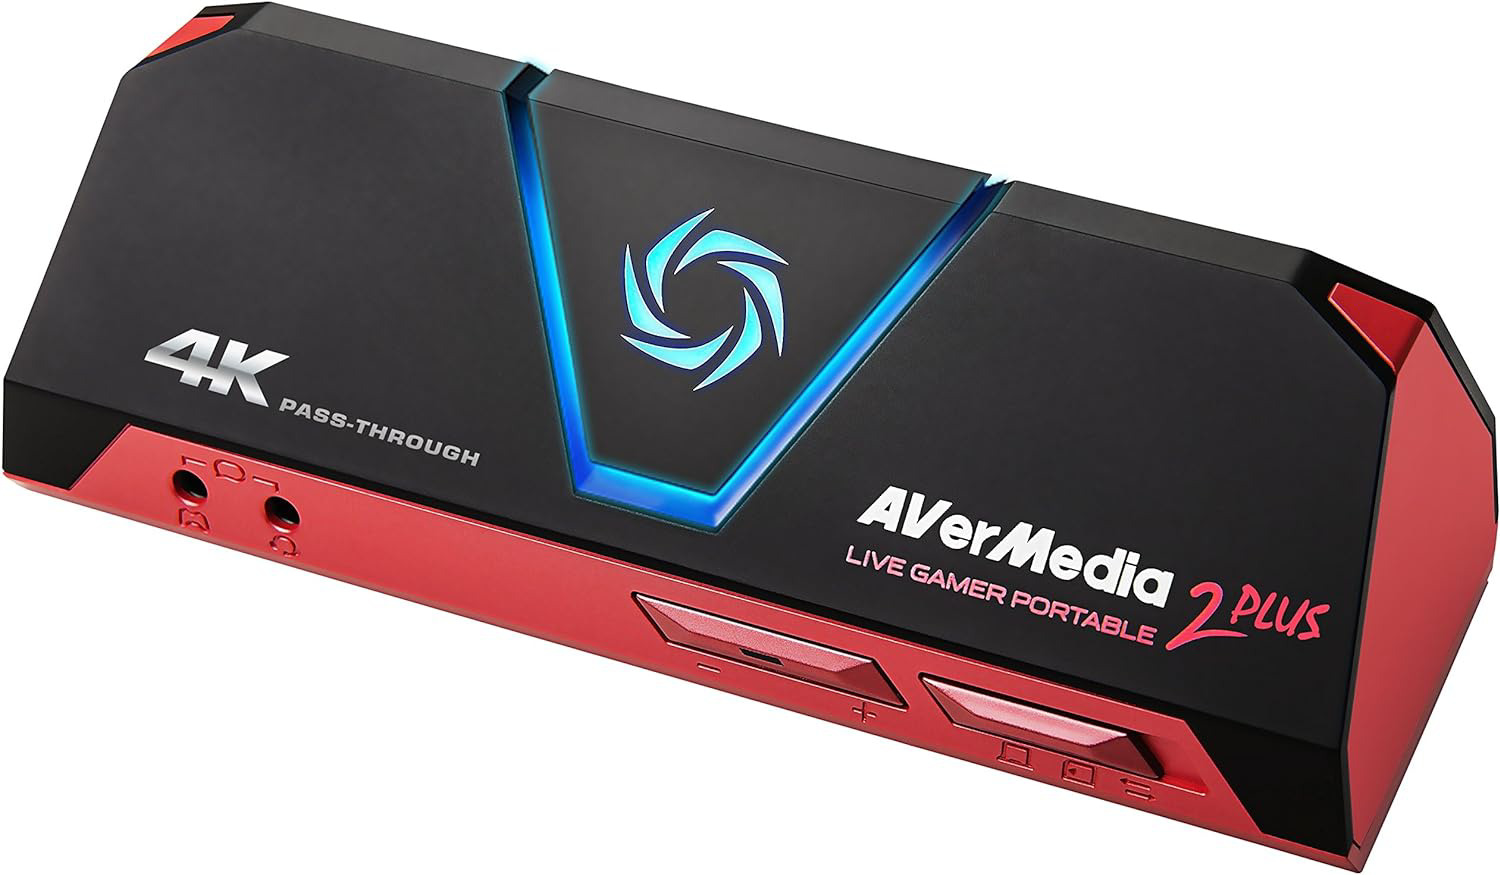 AVerMedia GC513 Live Gamer Portable 2 Plus - 4K Pass-Through Capture Card for Ga